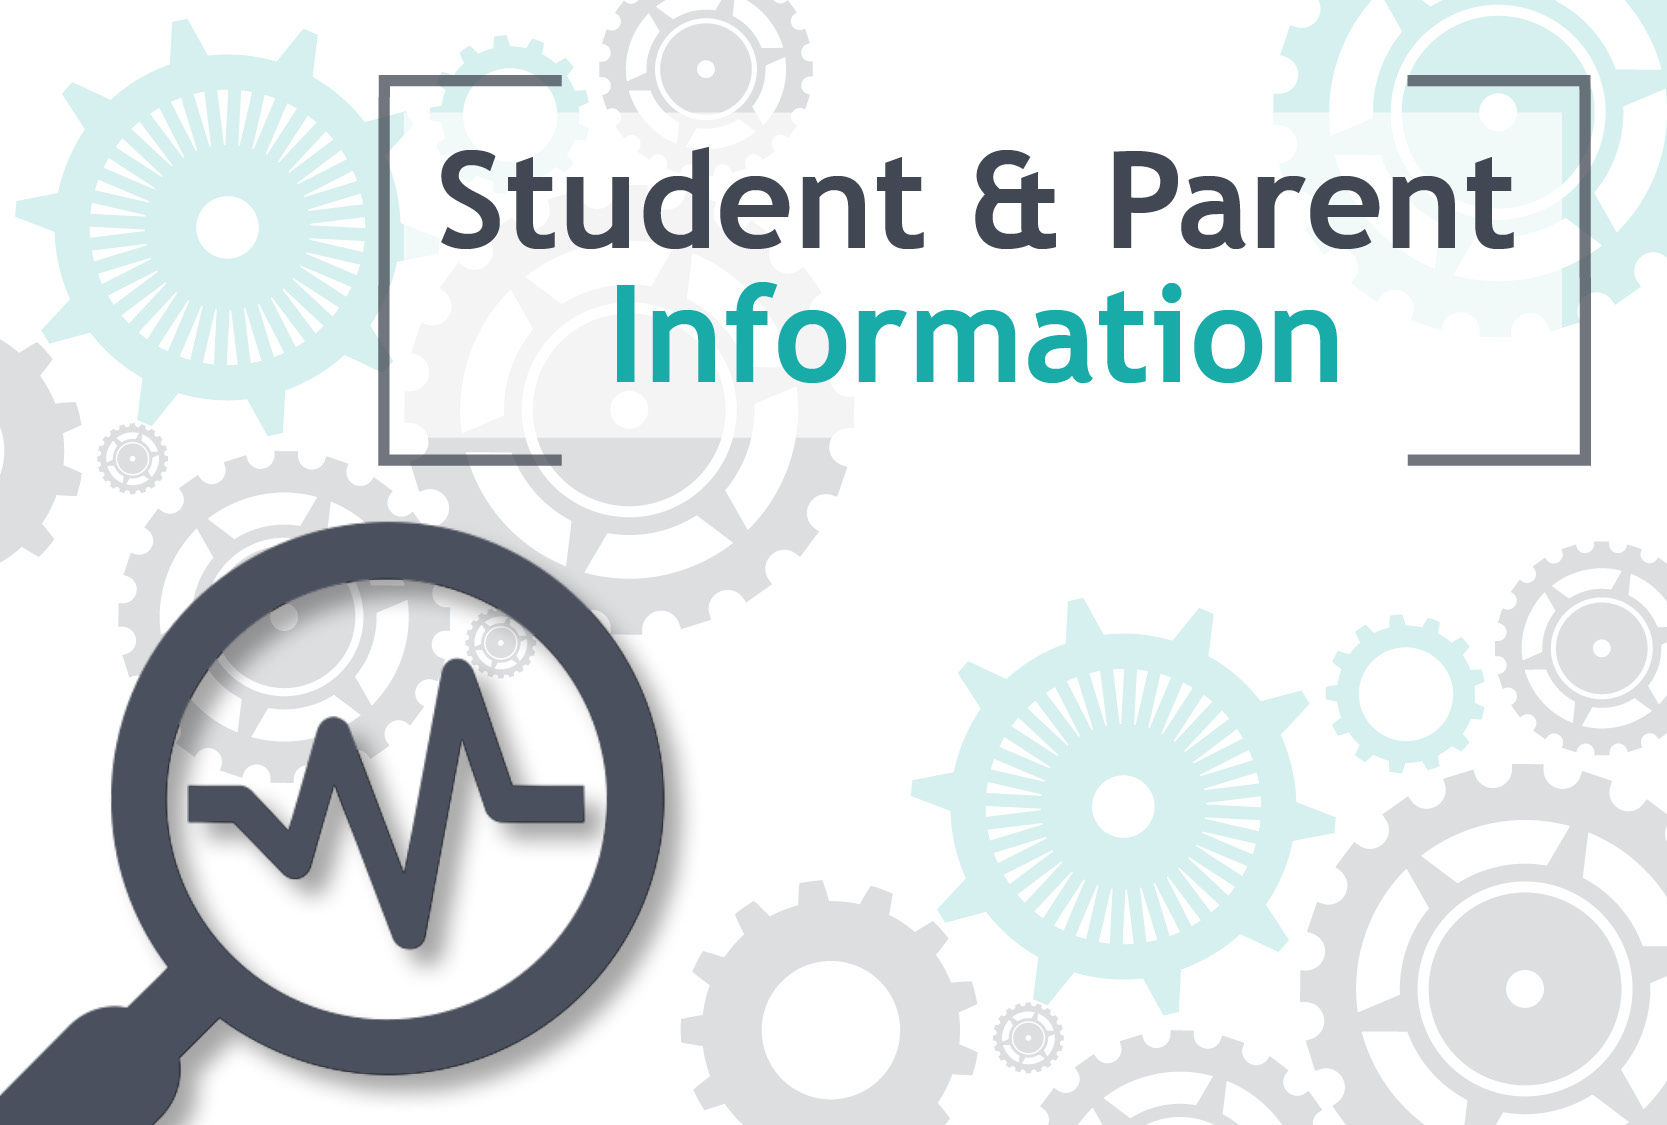 Student & Parent Information